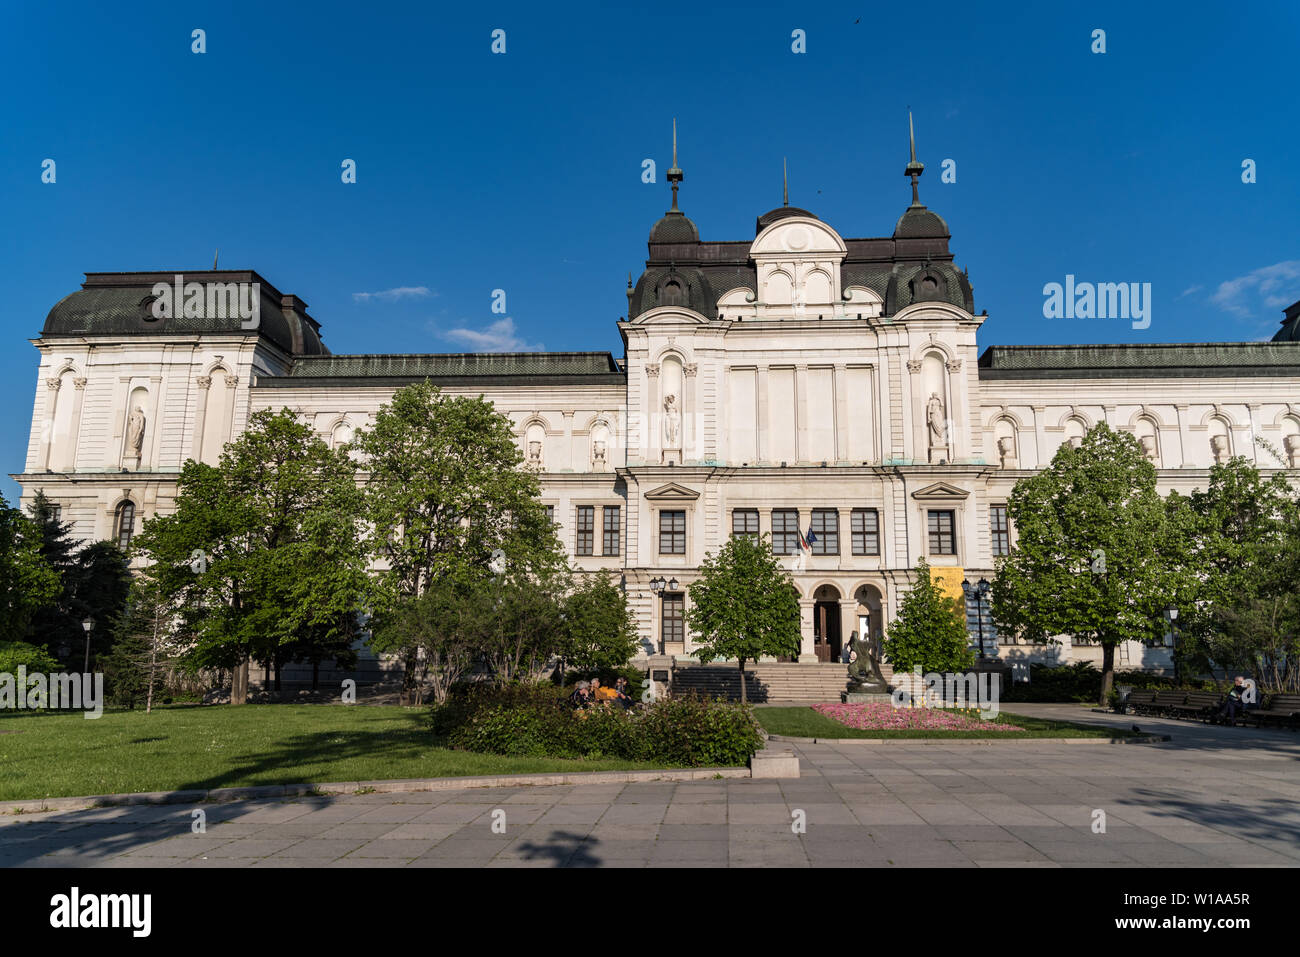 Sofia, Bulgaria - May 2, 2019: National Gallery for Foreign Art Quadrat 500 in Sofia, Bulgaria Stock Photo